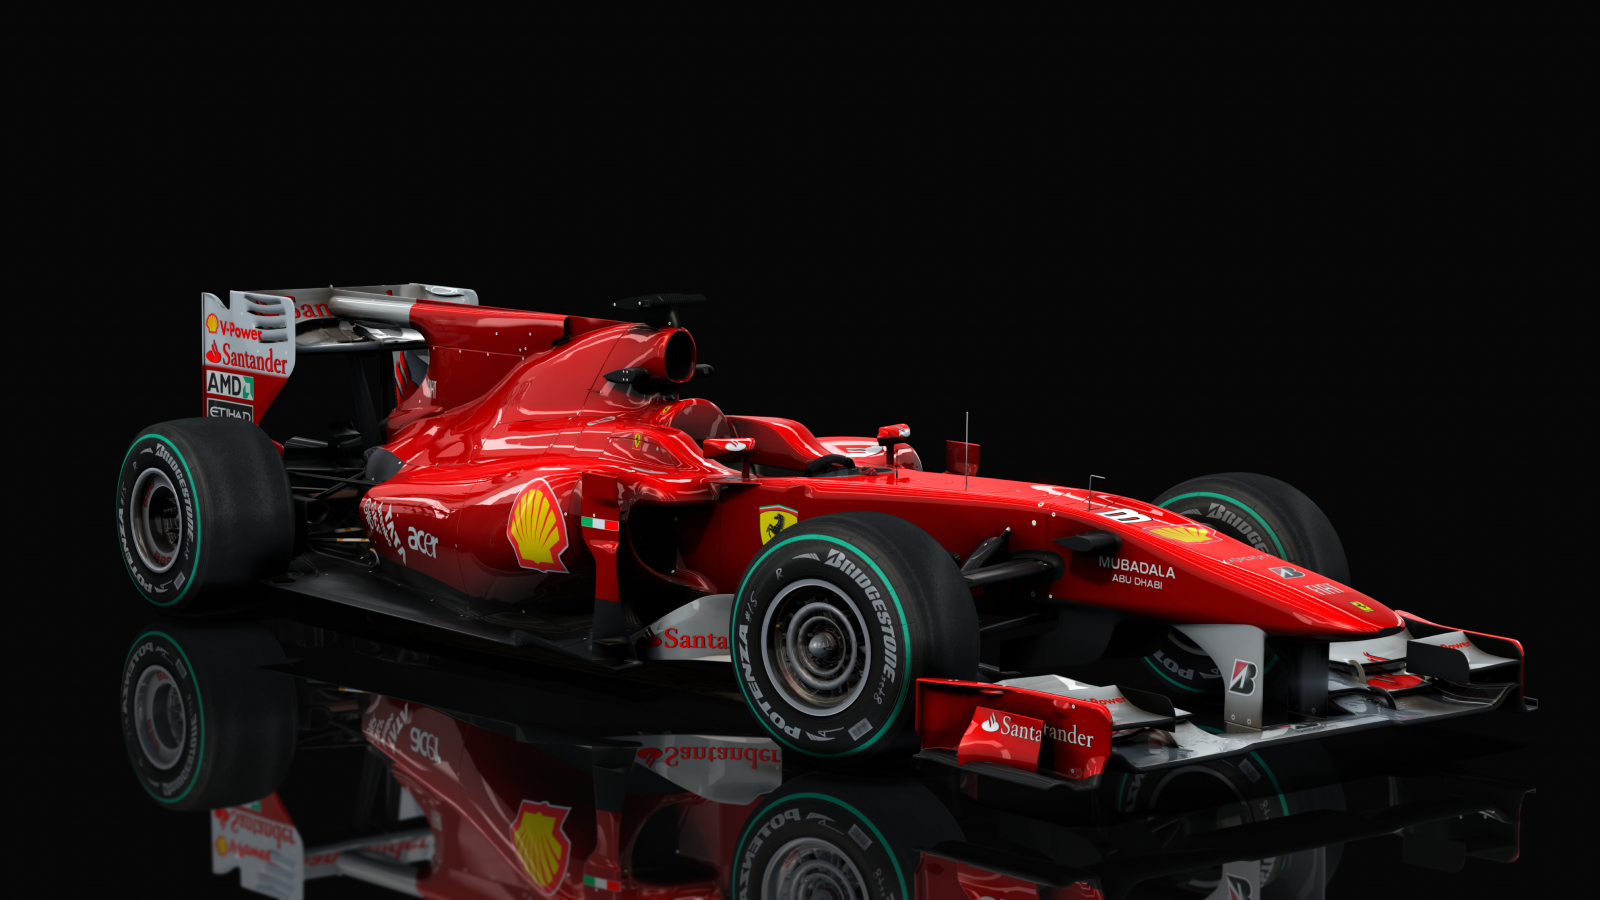 F1 2010 - Ferrari F10b, skin Alonso